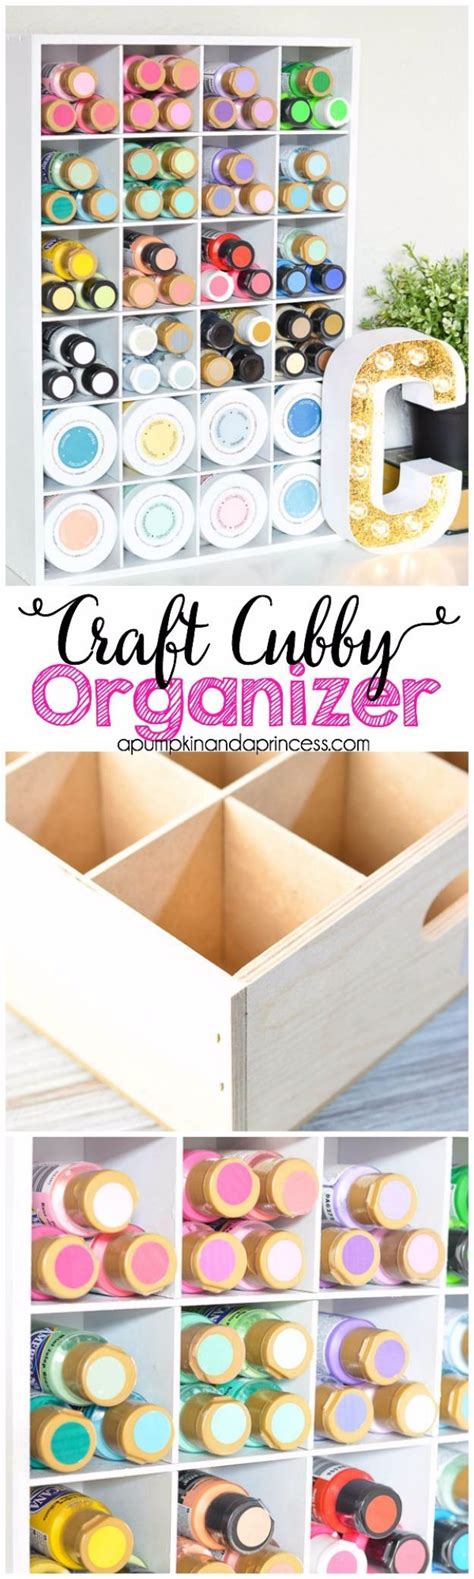 35 Cool Craft Room Storage Ideas Craft Organization Diy Craft Room